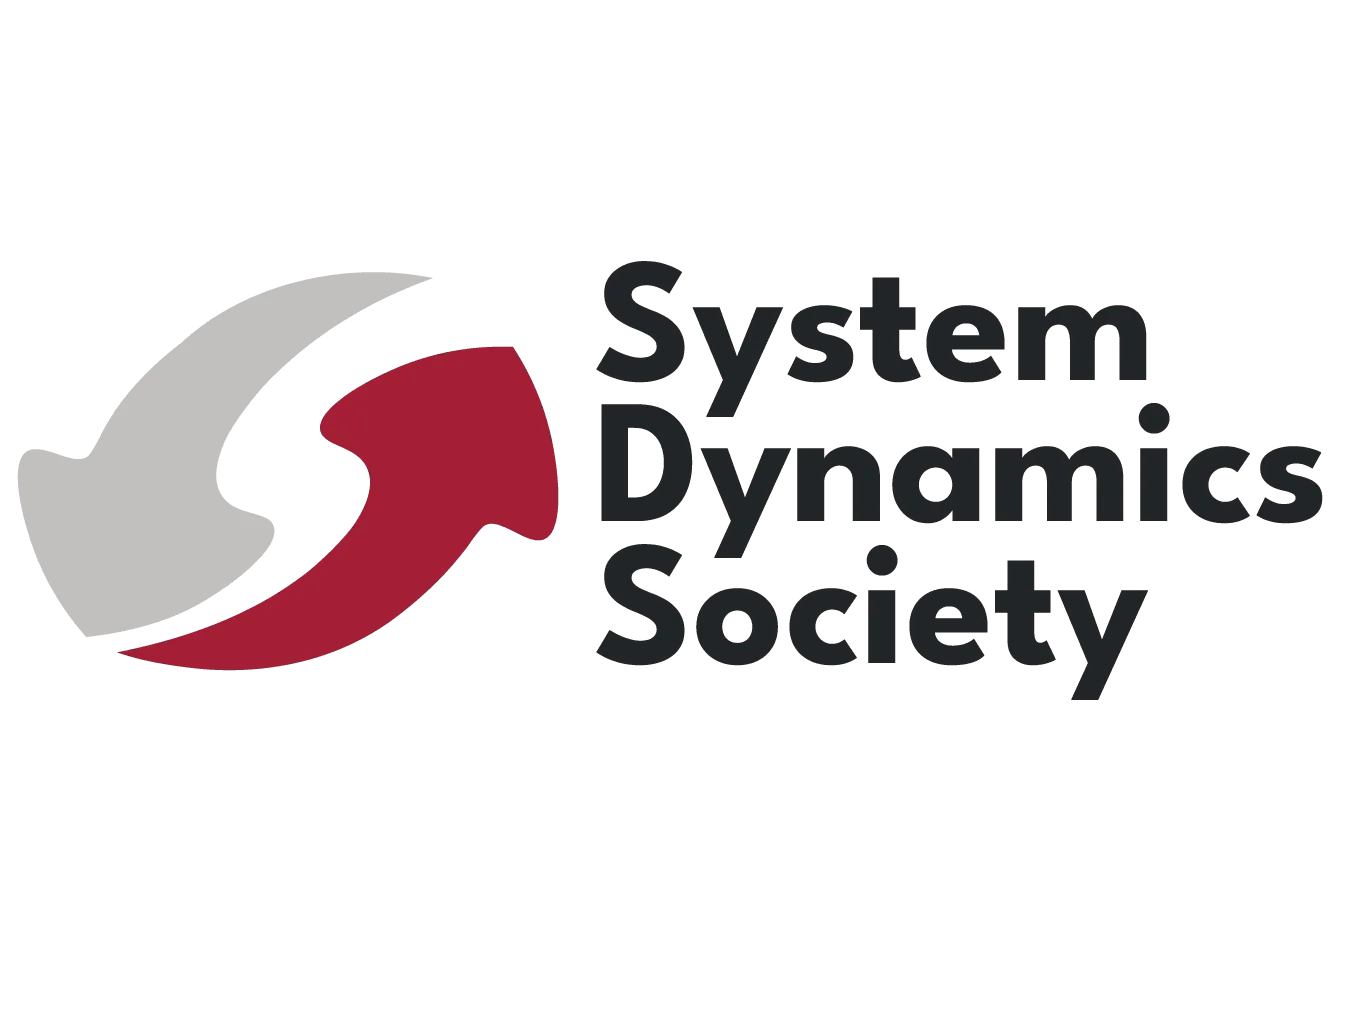 Discuss System Dynamics